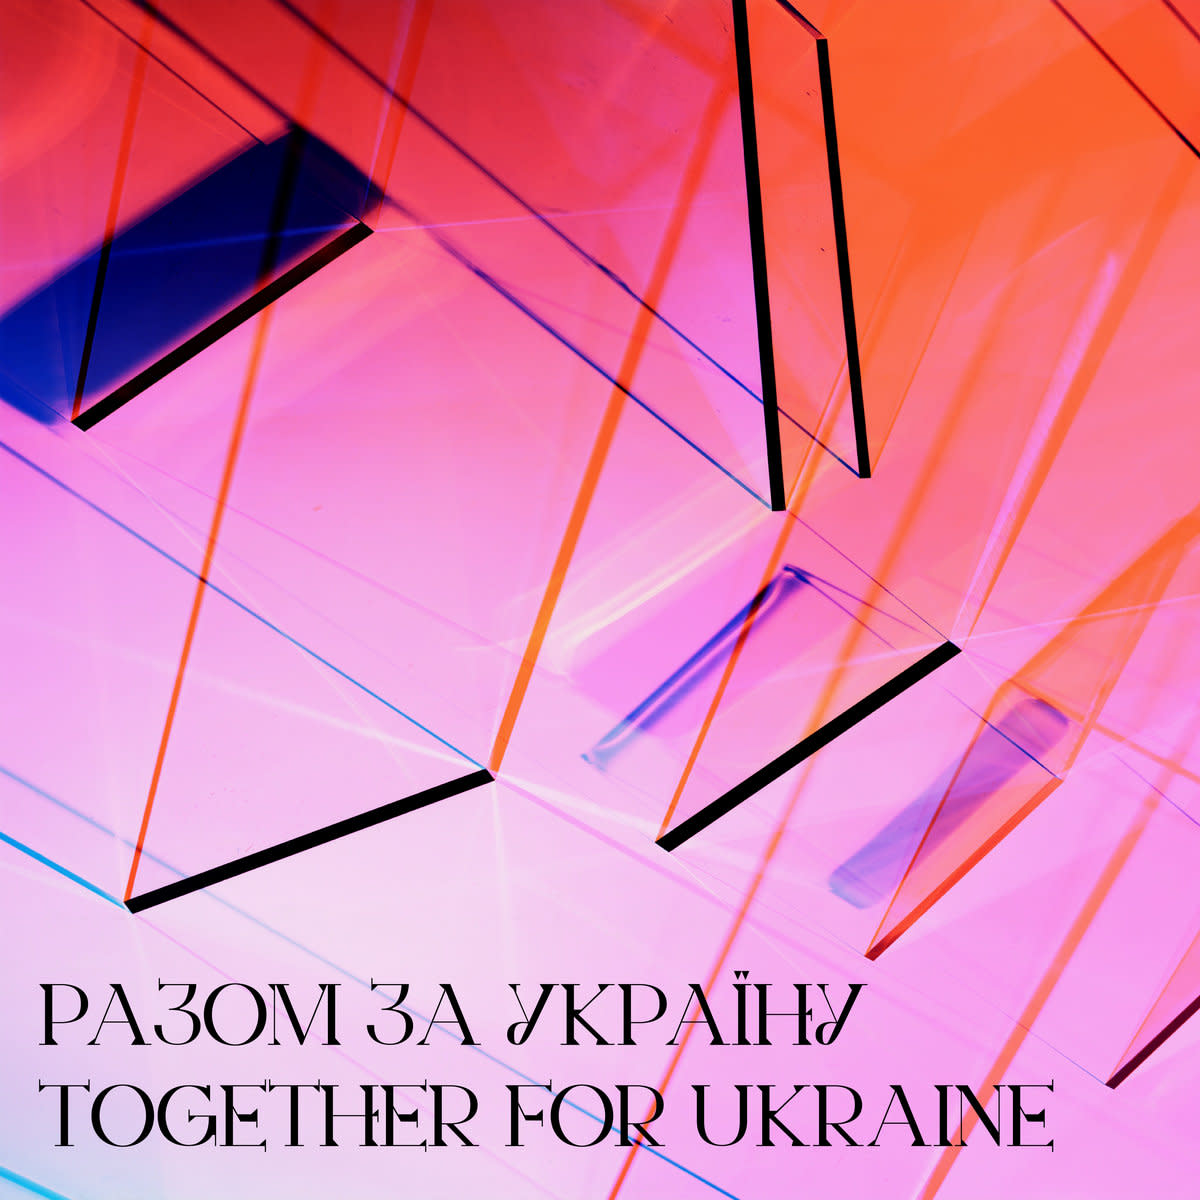 Ukraine Fundraiser TOGETHER FOR UKRAINE